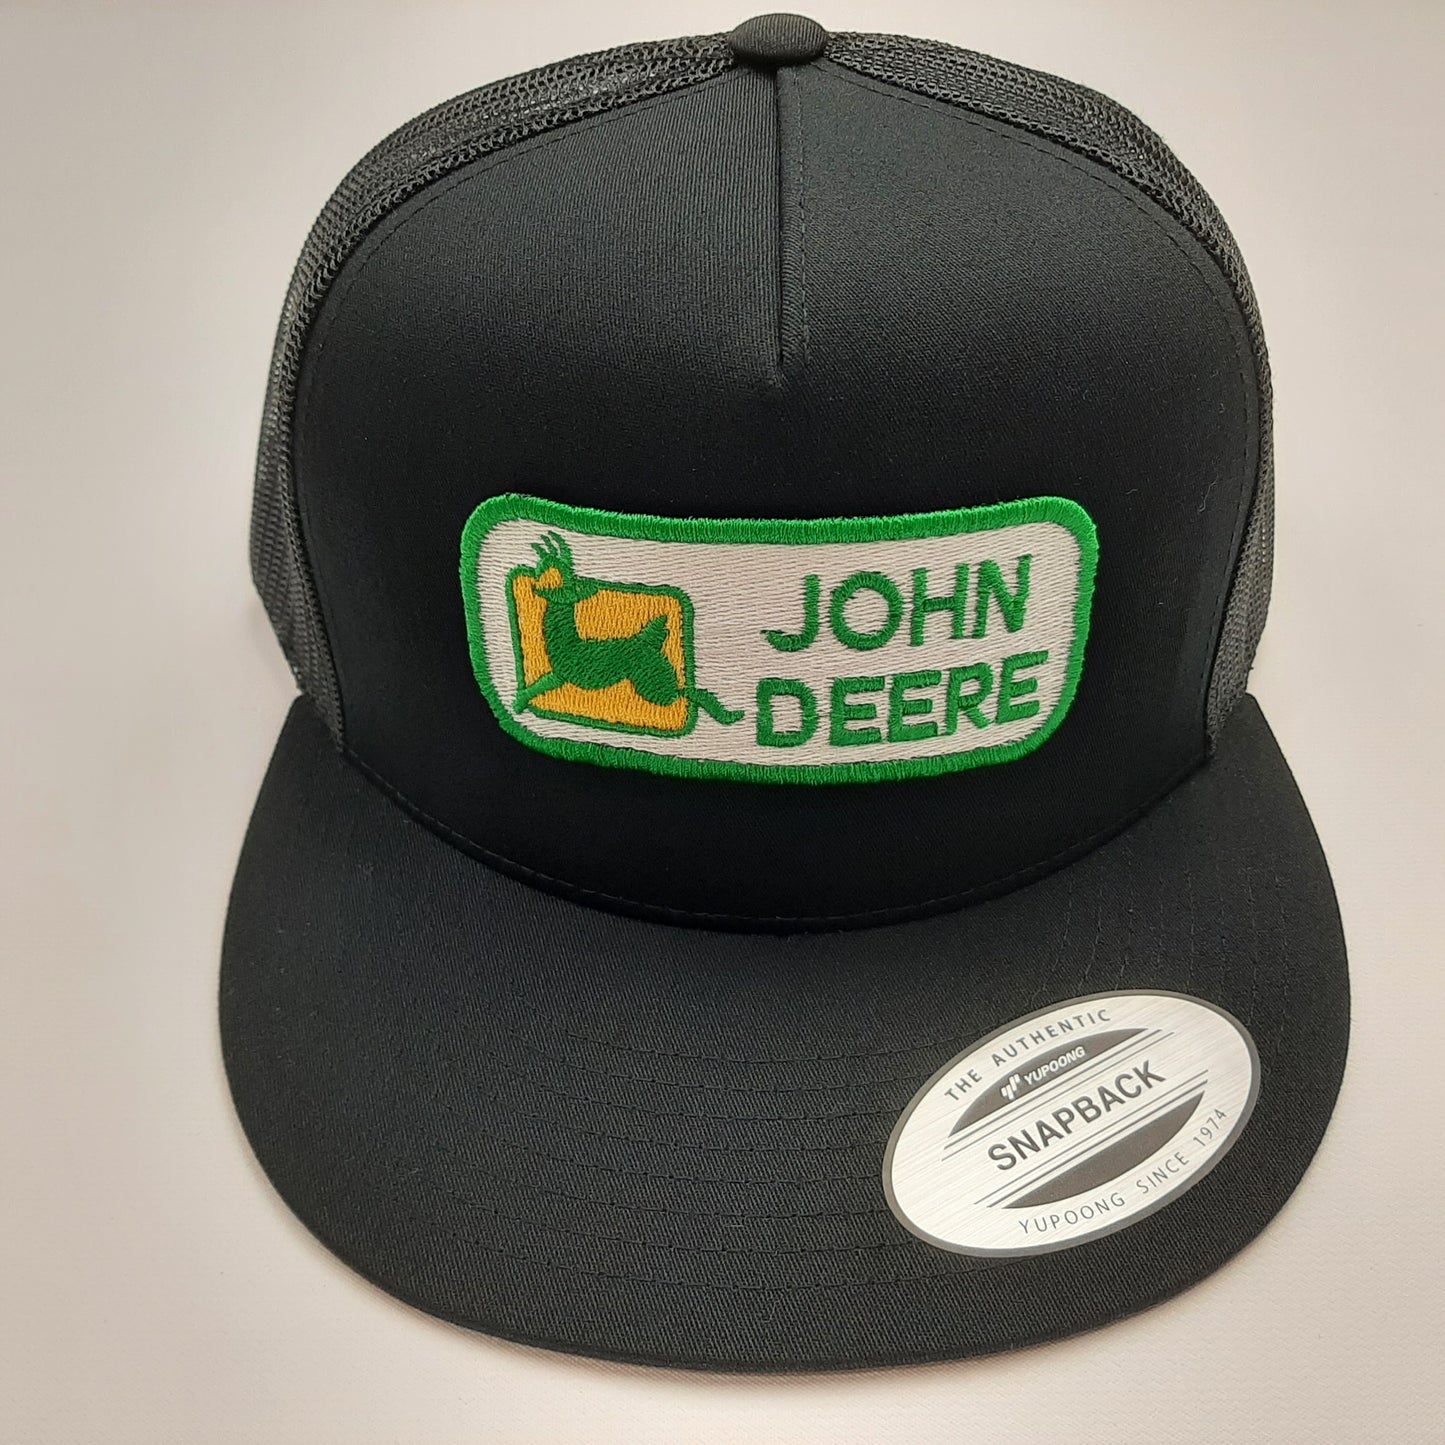 John Deere Embroidered Patch Flat Bill Mesh Snapback Cap Hat Black Yupoong